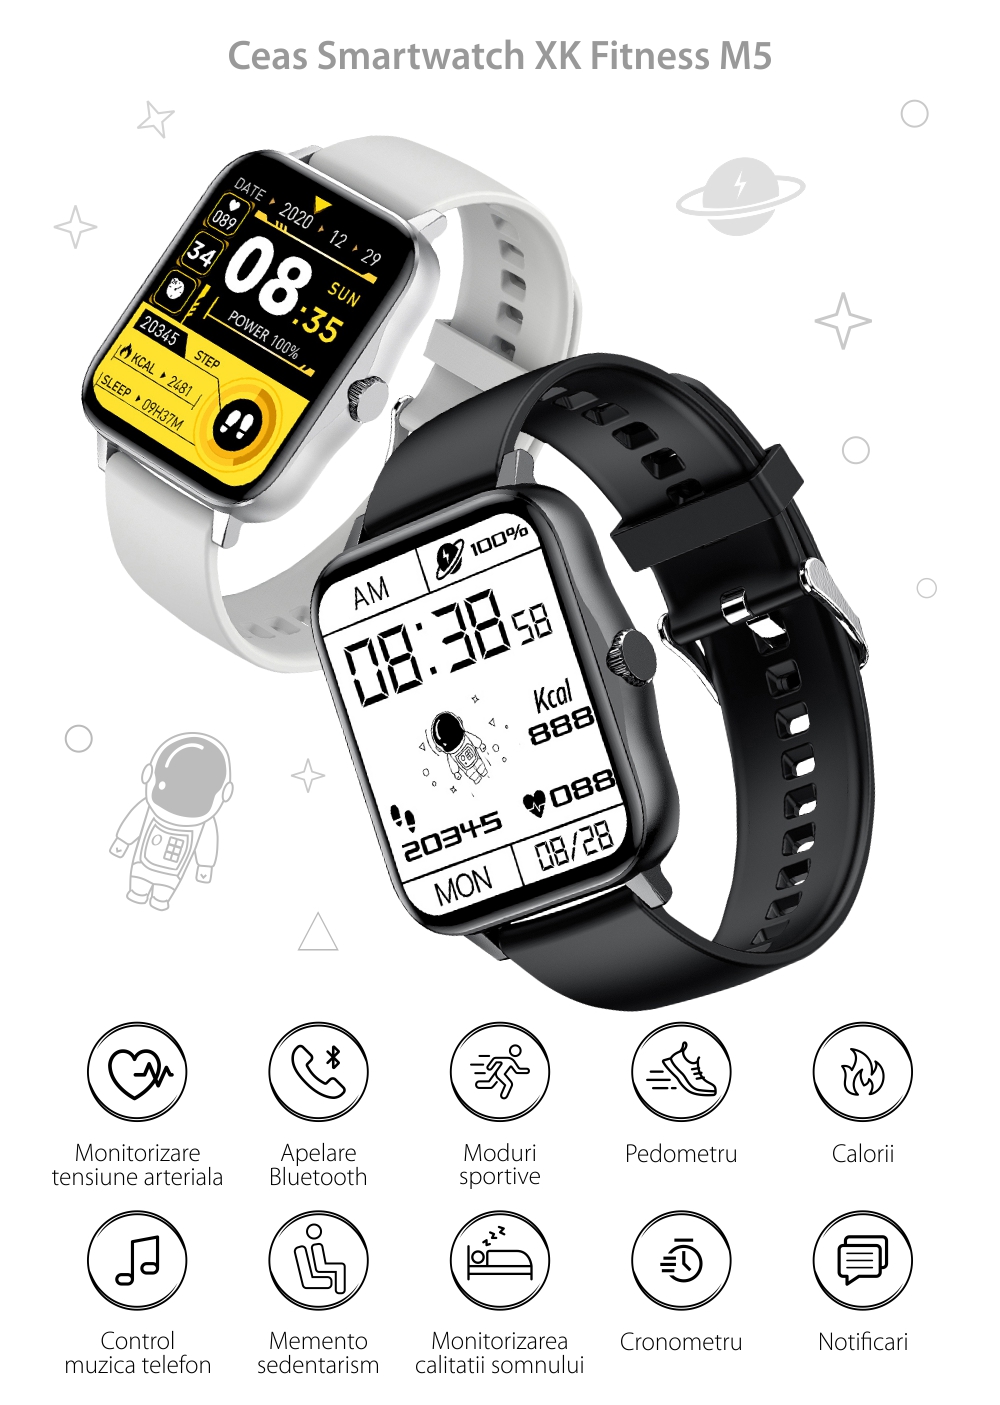 Ceas Smartwatch XK Fitness M5 cu Display 1.75 inch IPS, Exercitii, Calorii, Alb